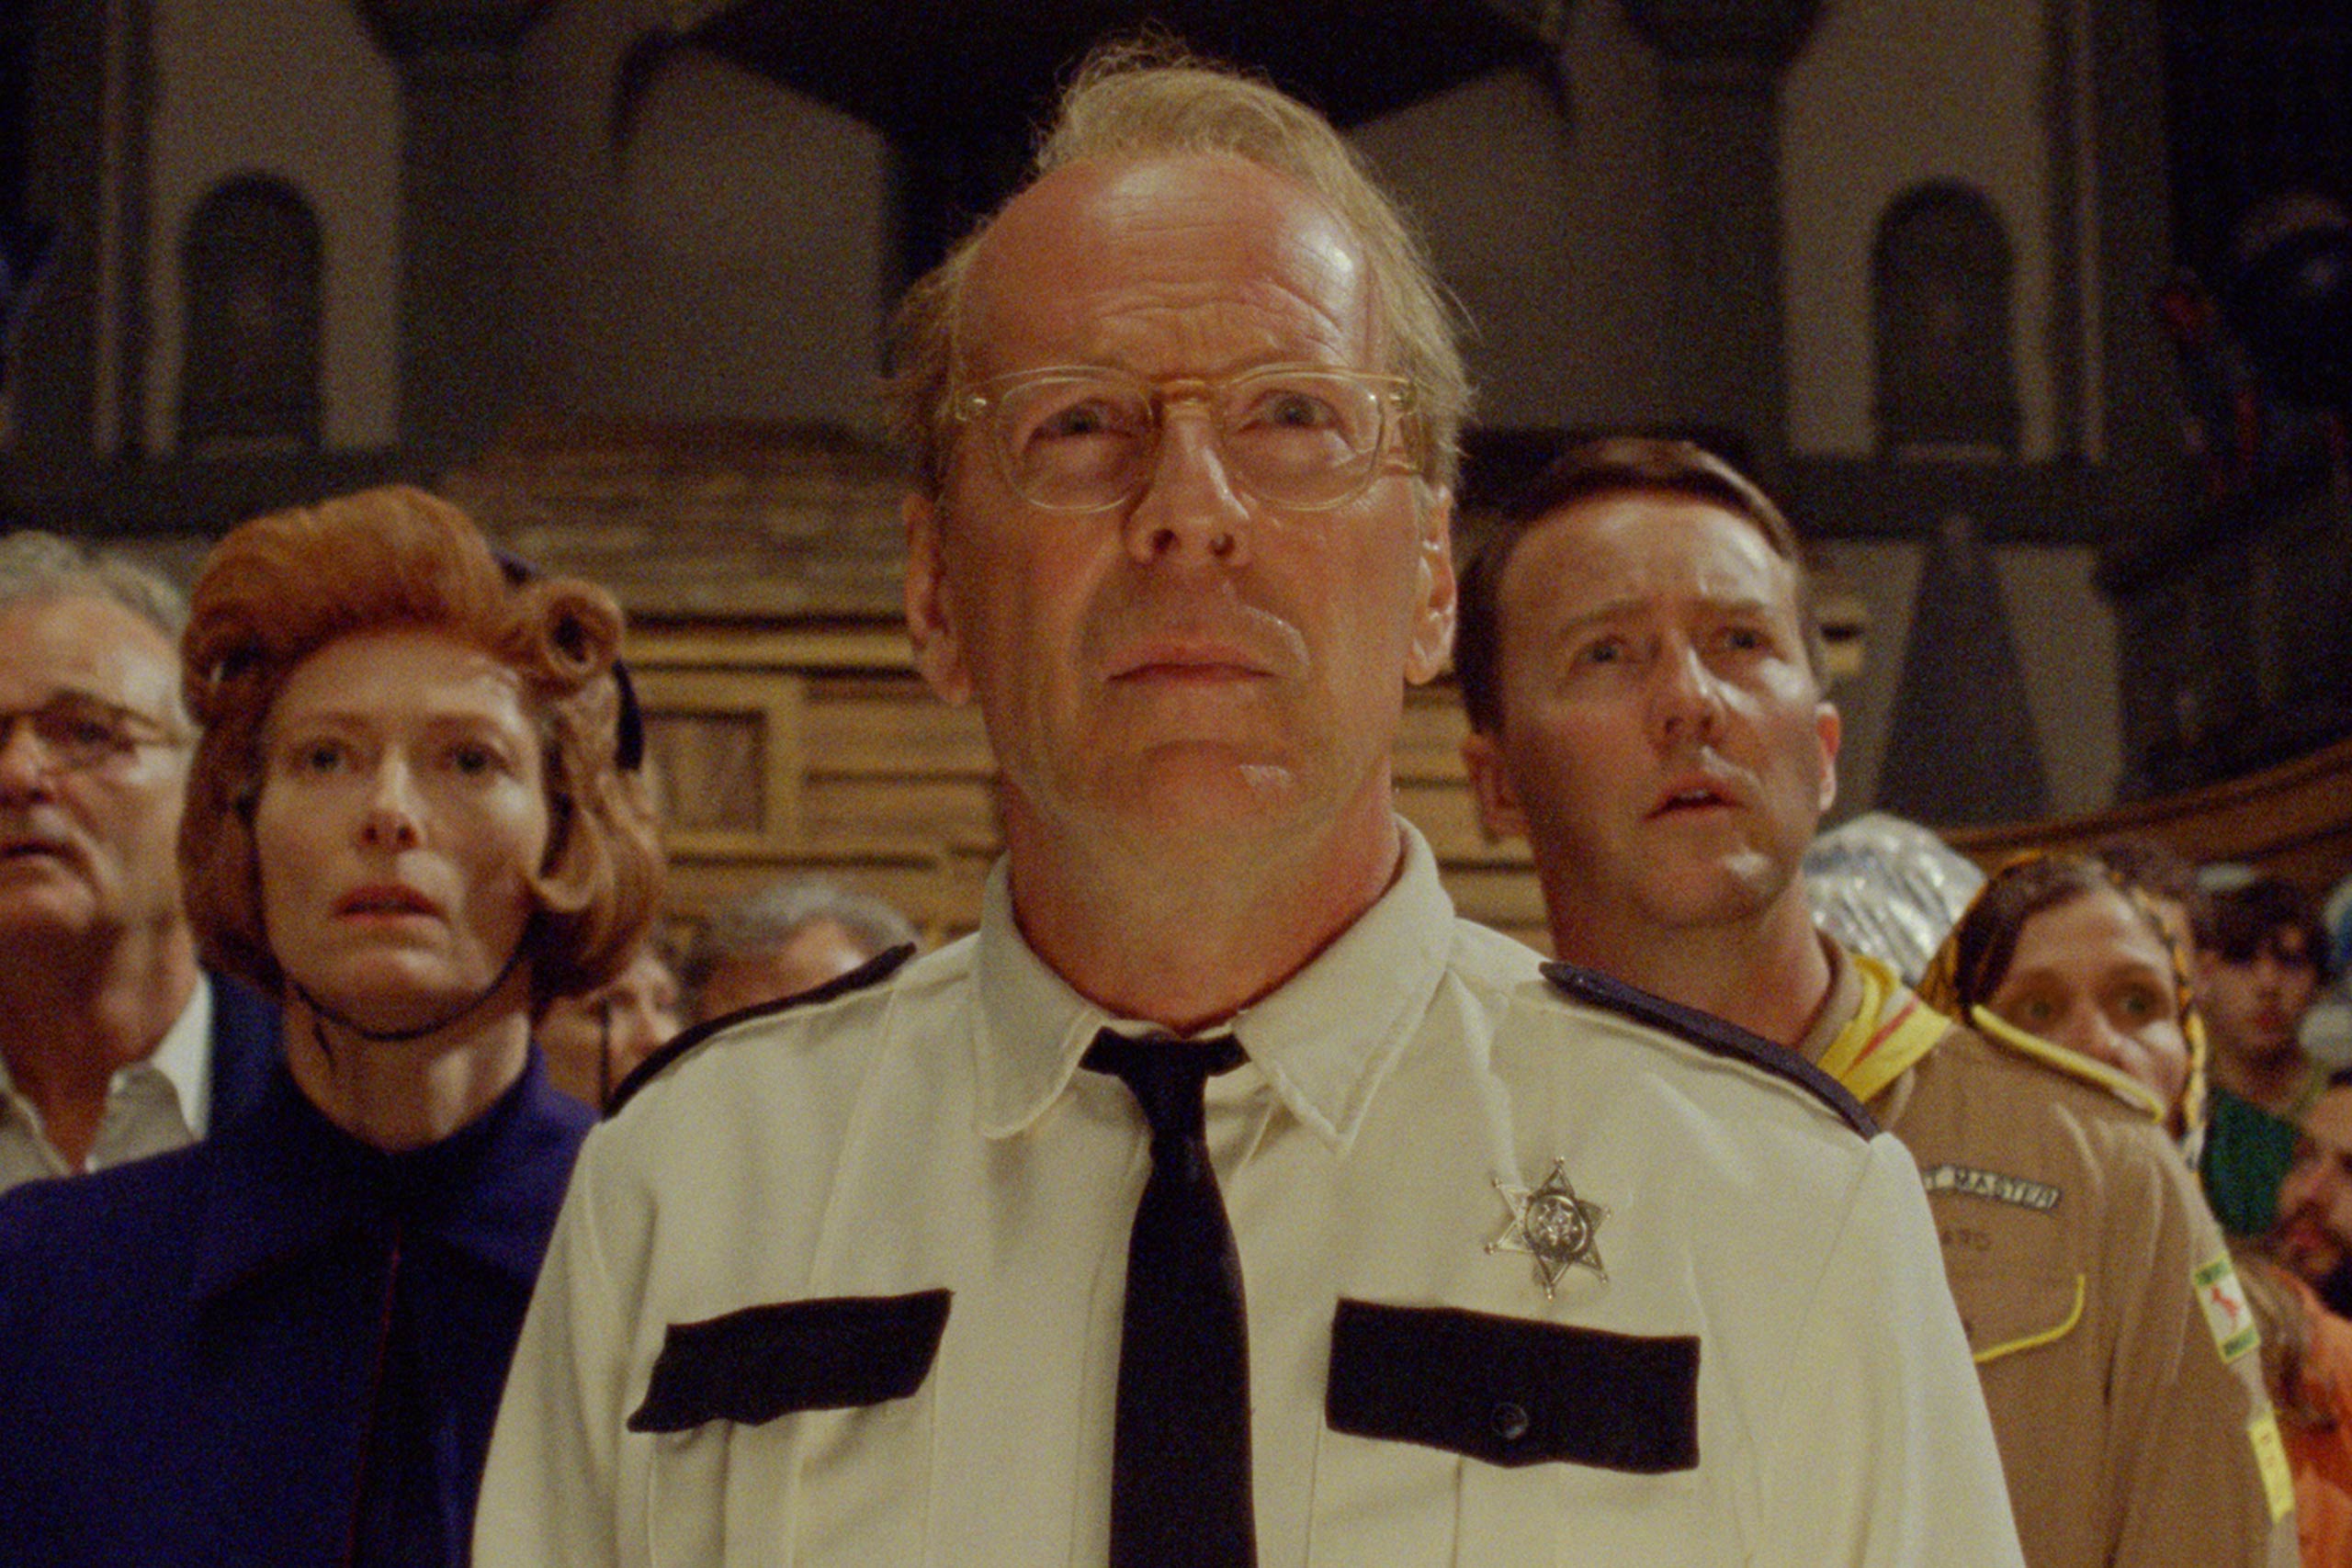 Bruce Willis as Captain Sharp in Moonrise Kingdom, 2012.